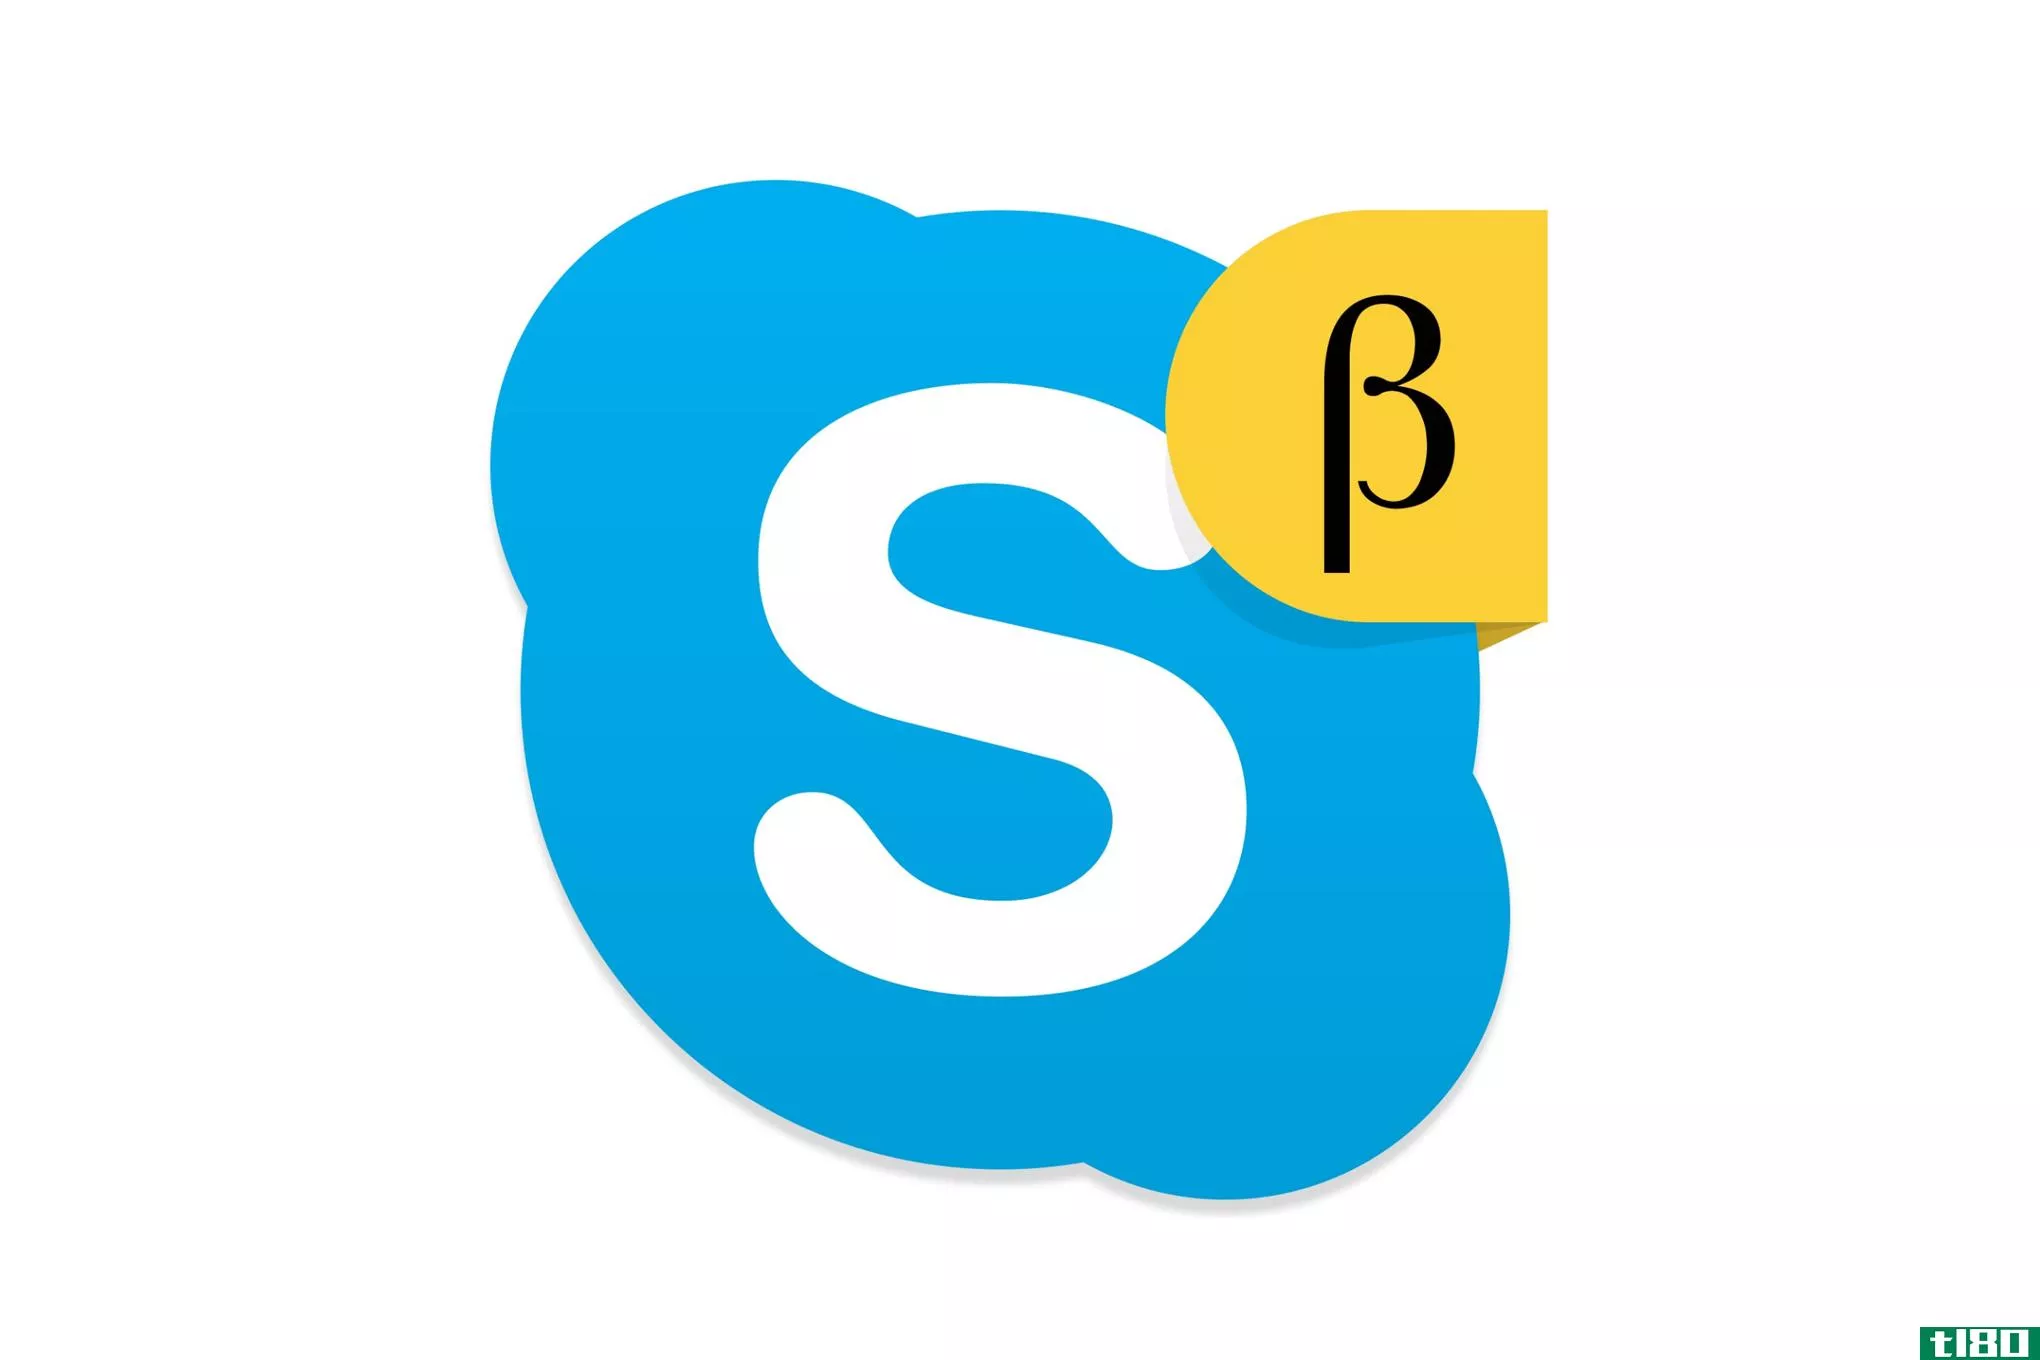 skype insiders程序允许ios、android和mac用户测试新功能